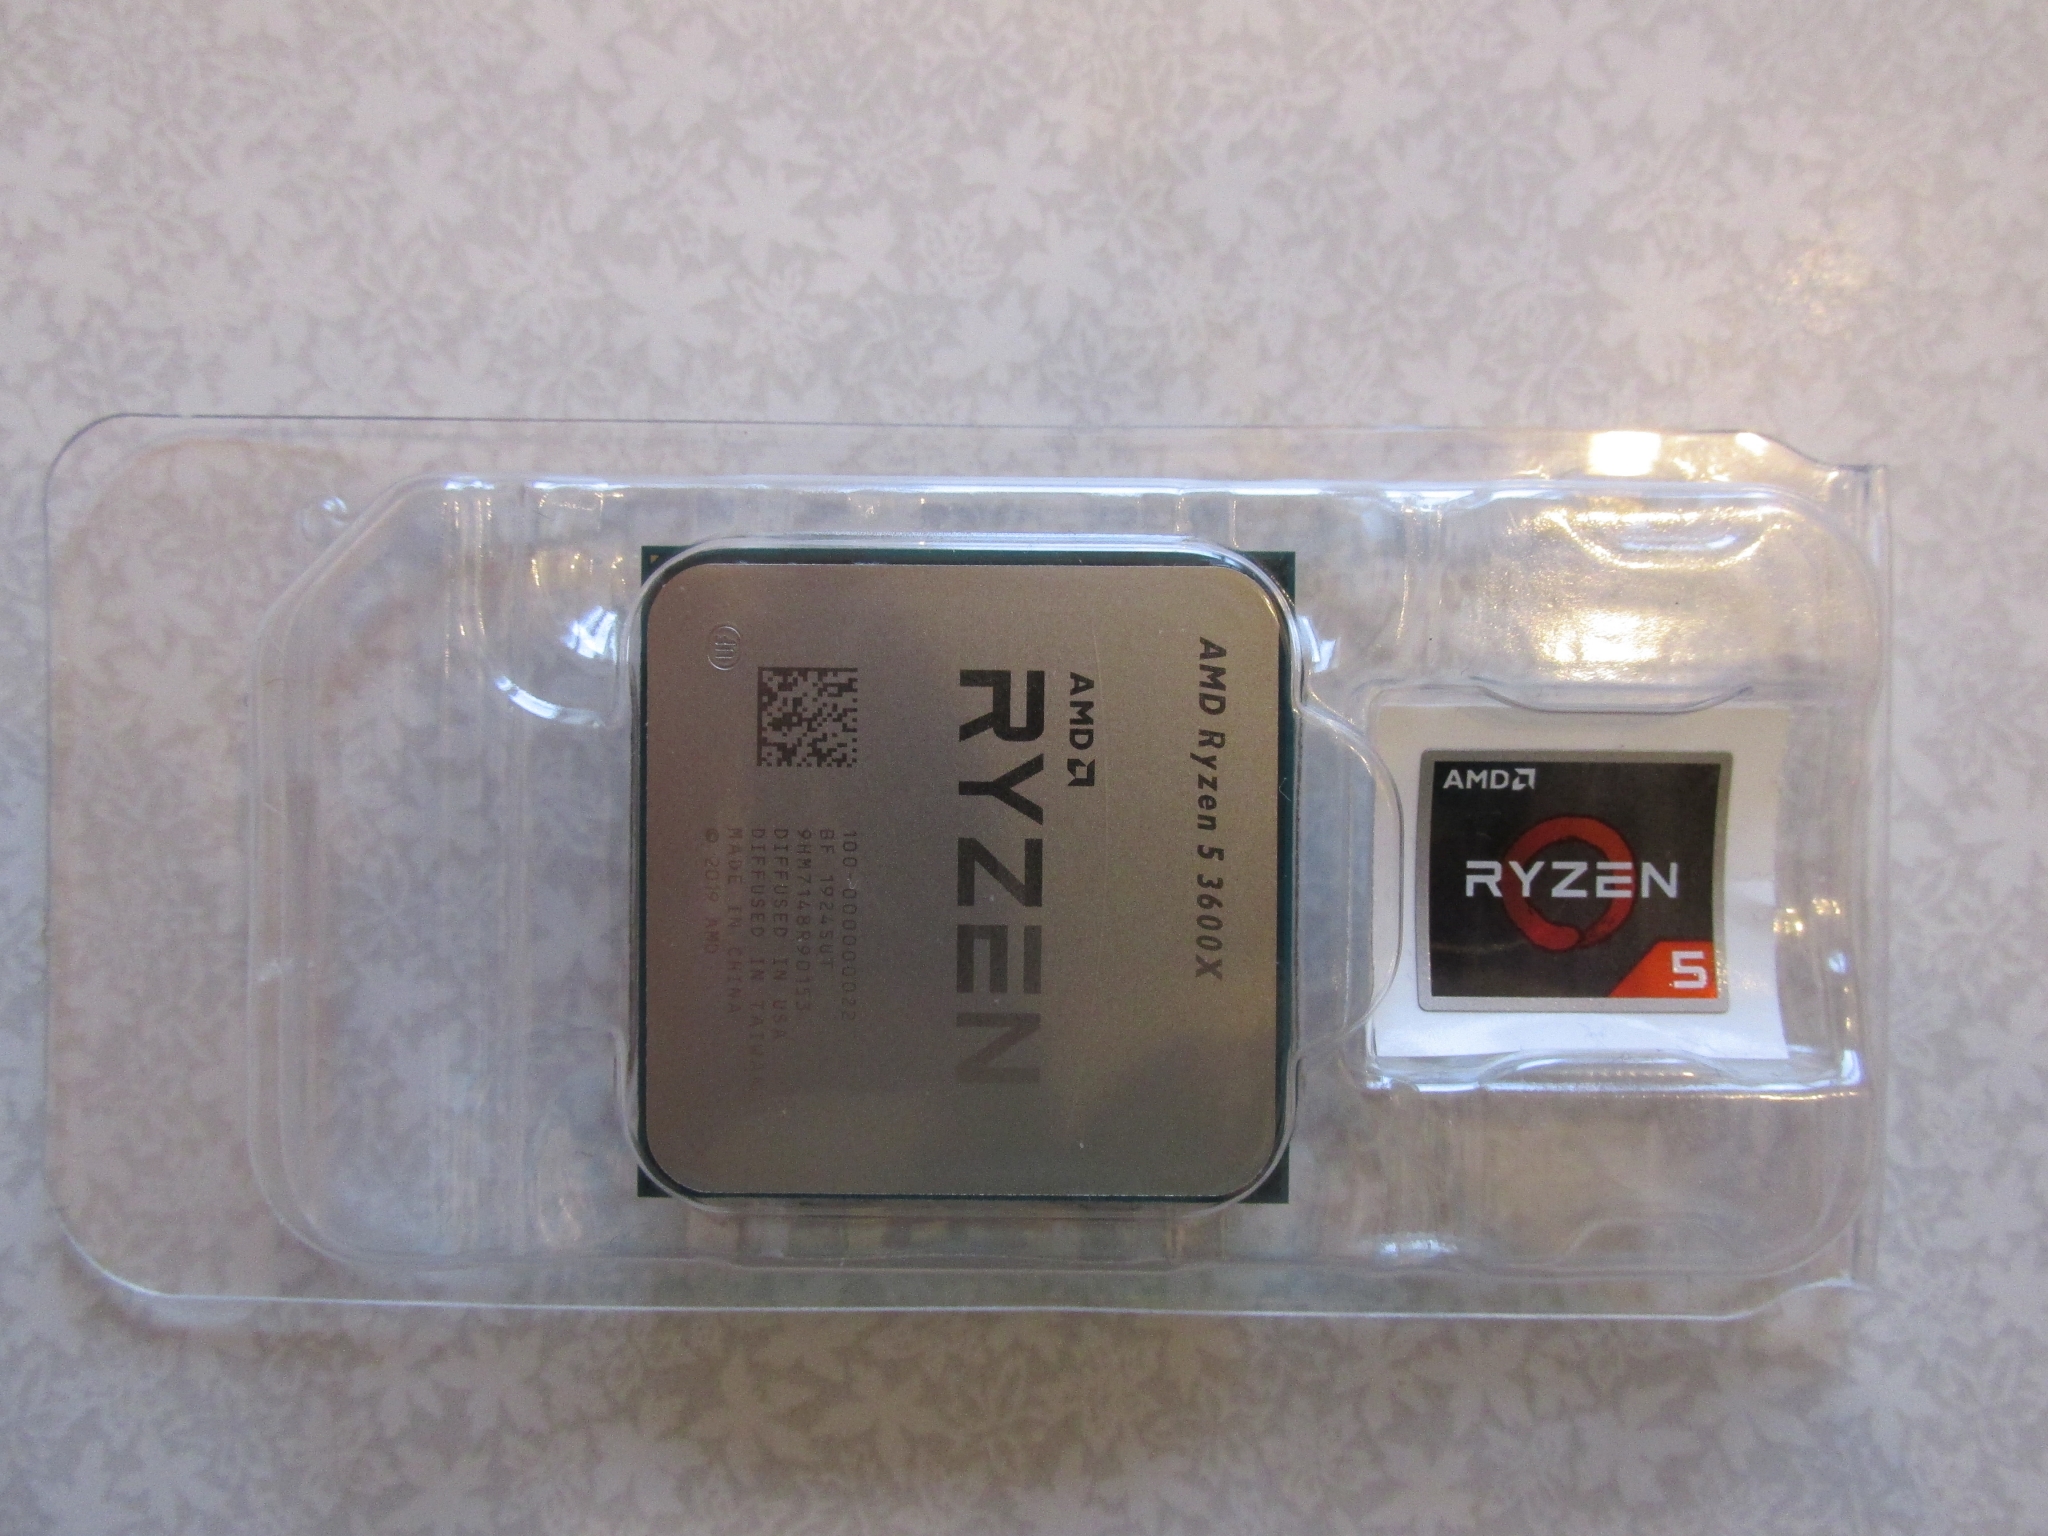 Amd ryzen 5600 купить. AMD Ryzen 5 3600. AMD Ryzen 5 3600 OEM. Процессор AMD Ryzen 5 3600 am4. 5600g Ryzen OEM упаковка.